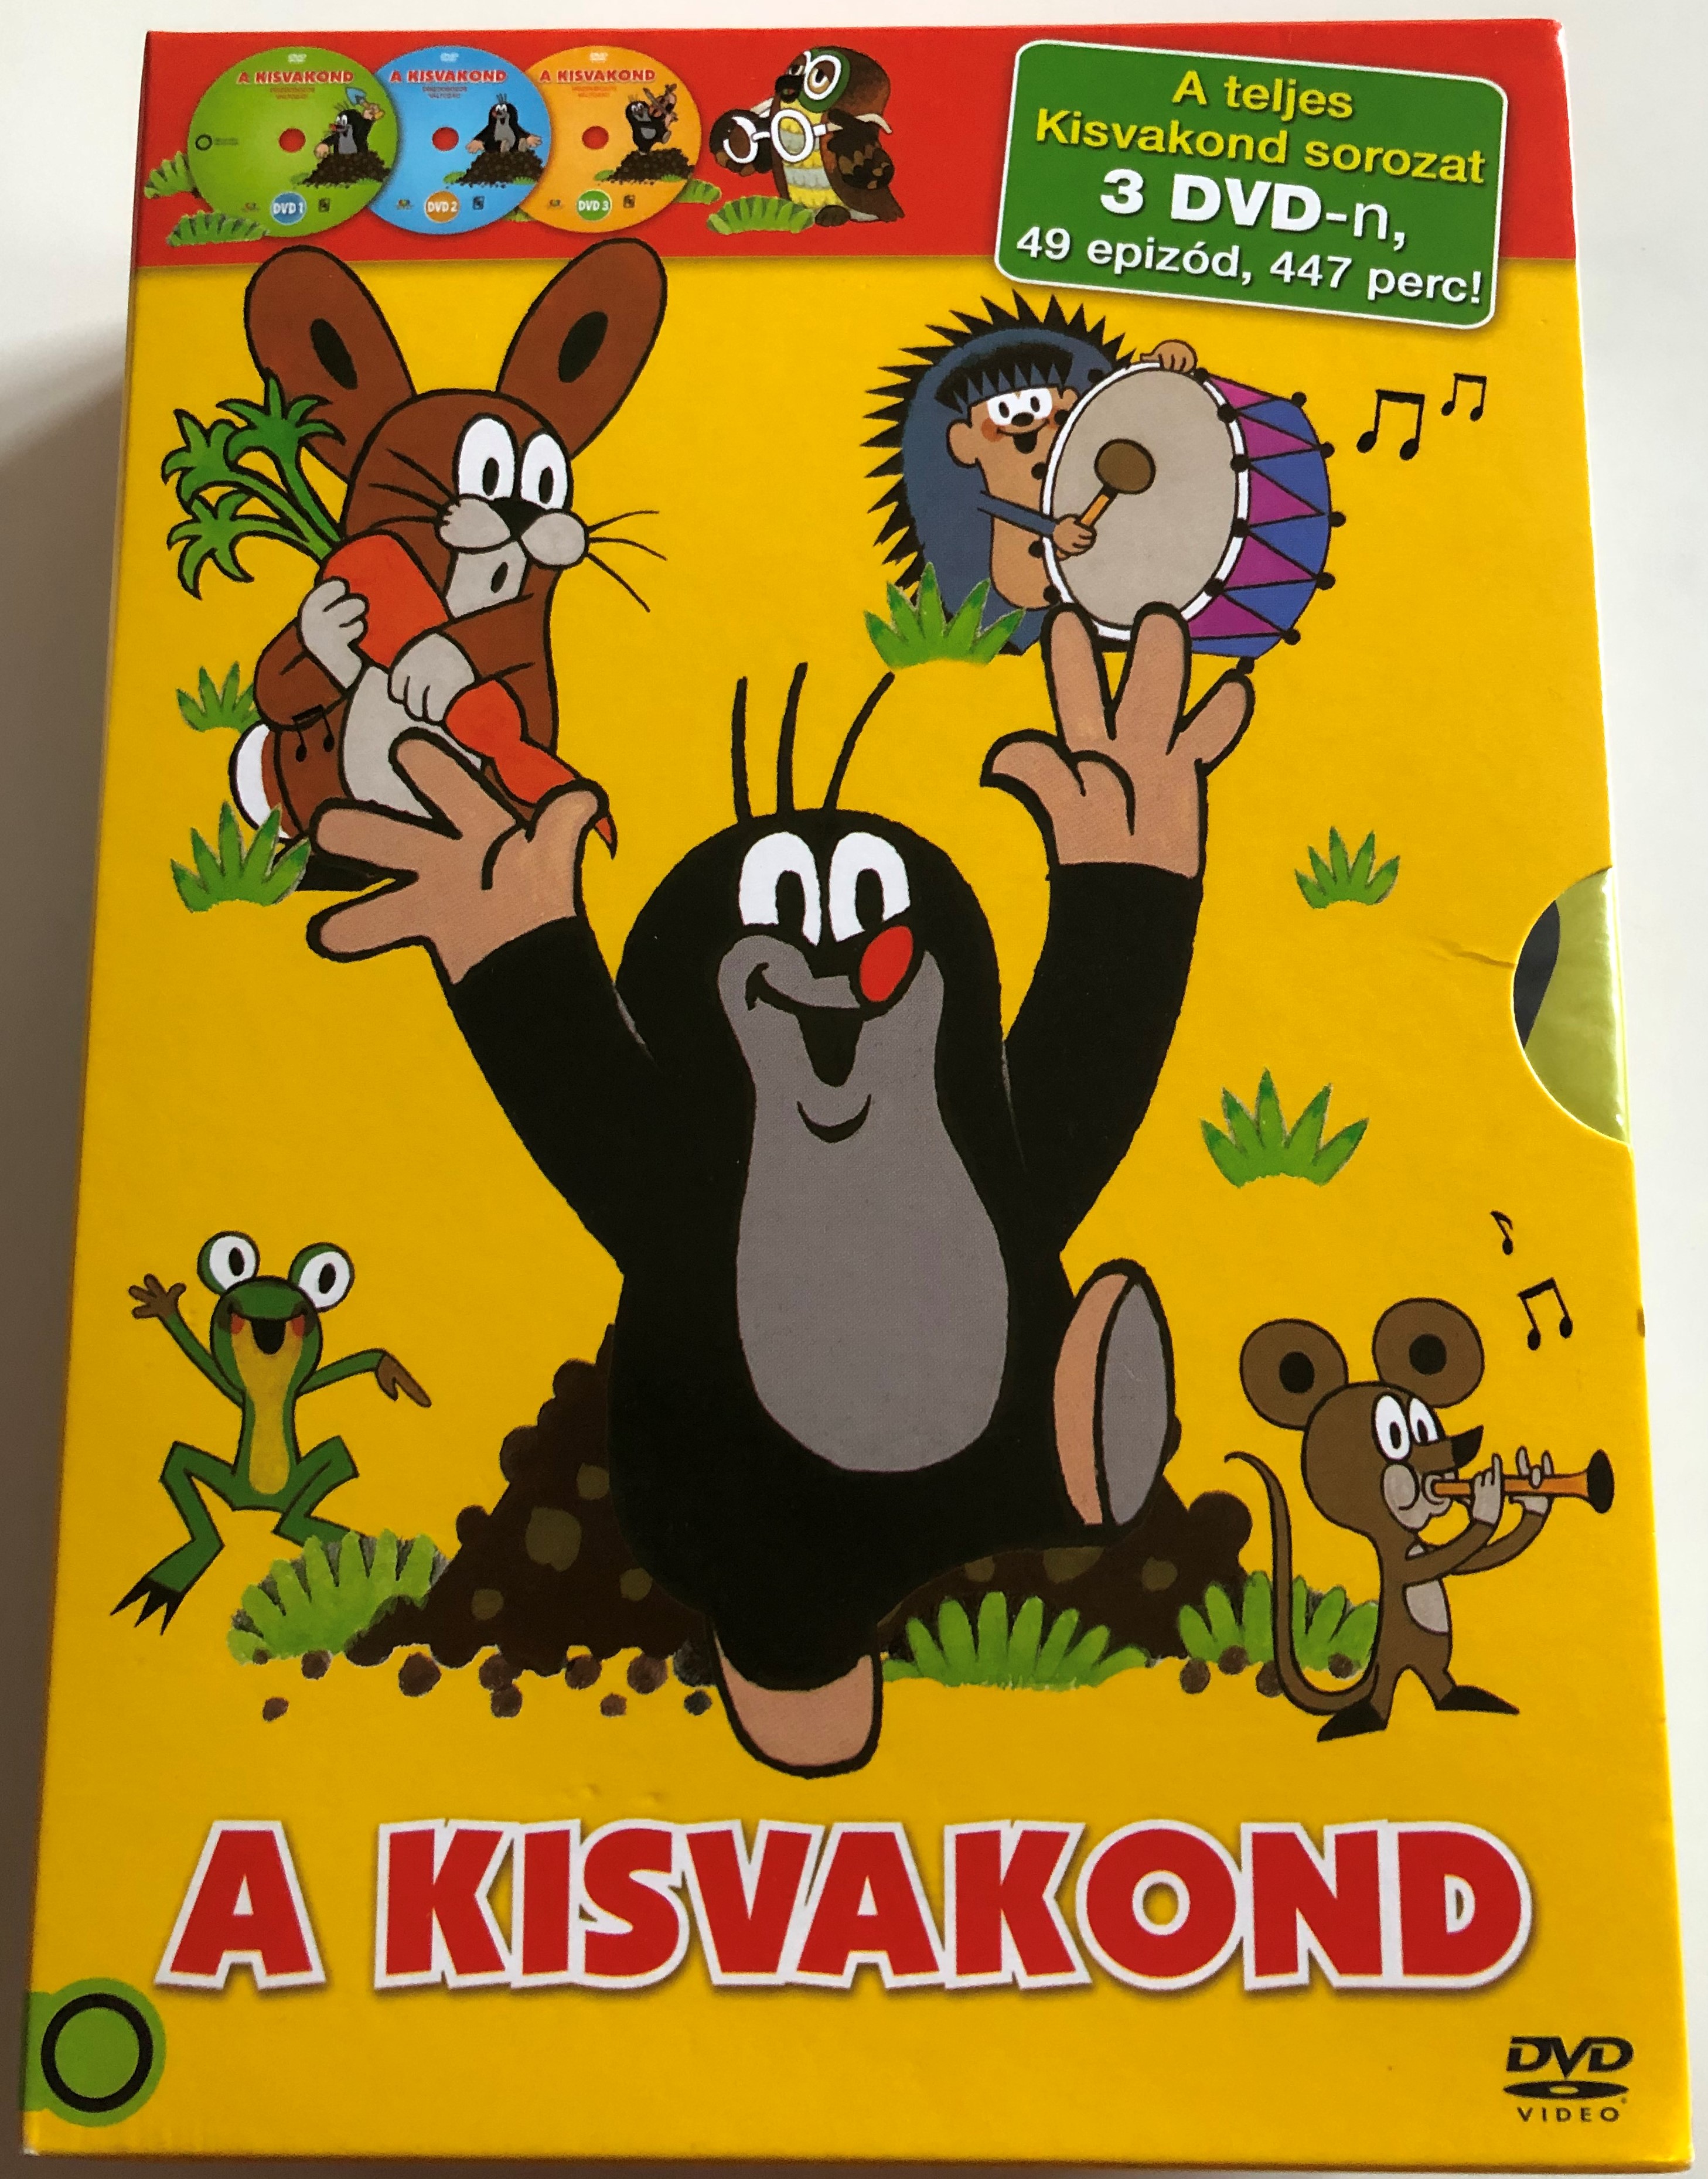 A kisvakond DVD full SET Krtek the Little Mole Full Series / 3 Discs - 447  minutes - 49 episodes / Kisvakond teljes sorozat / Krteček - Bible in My  Language